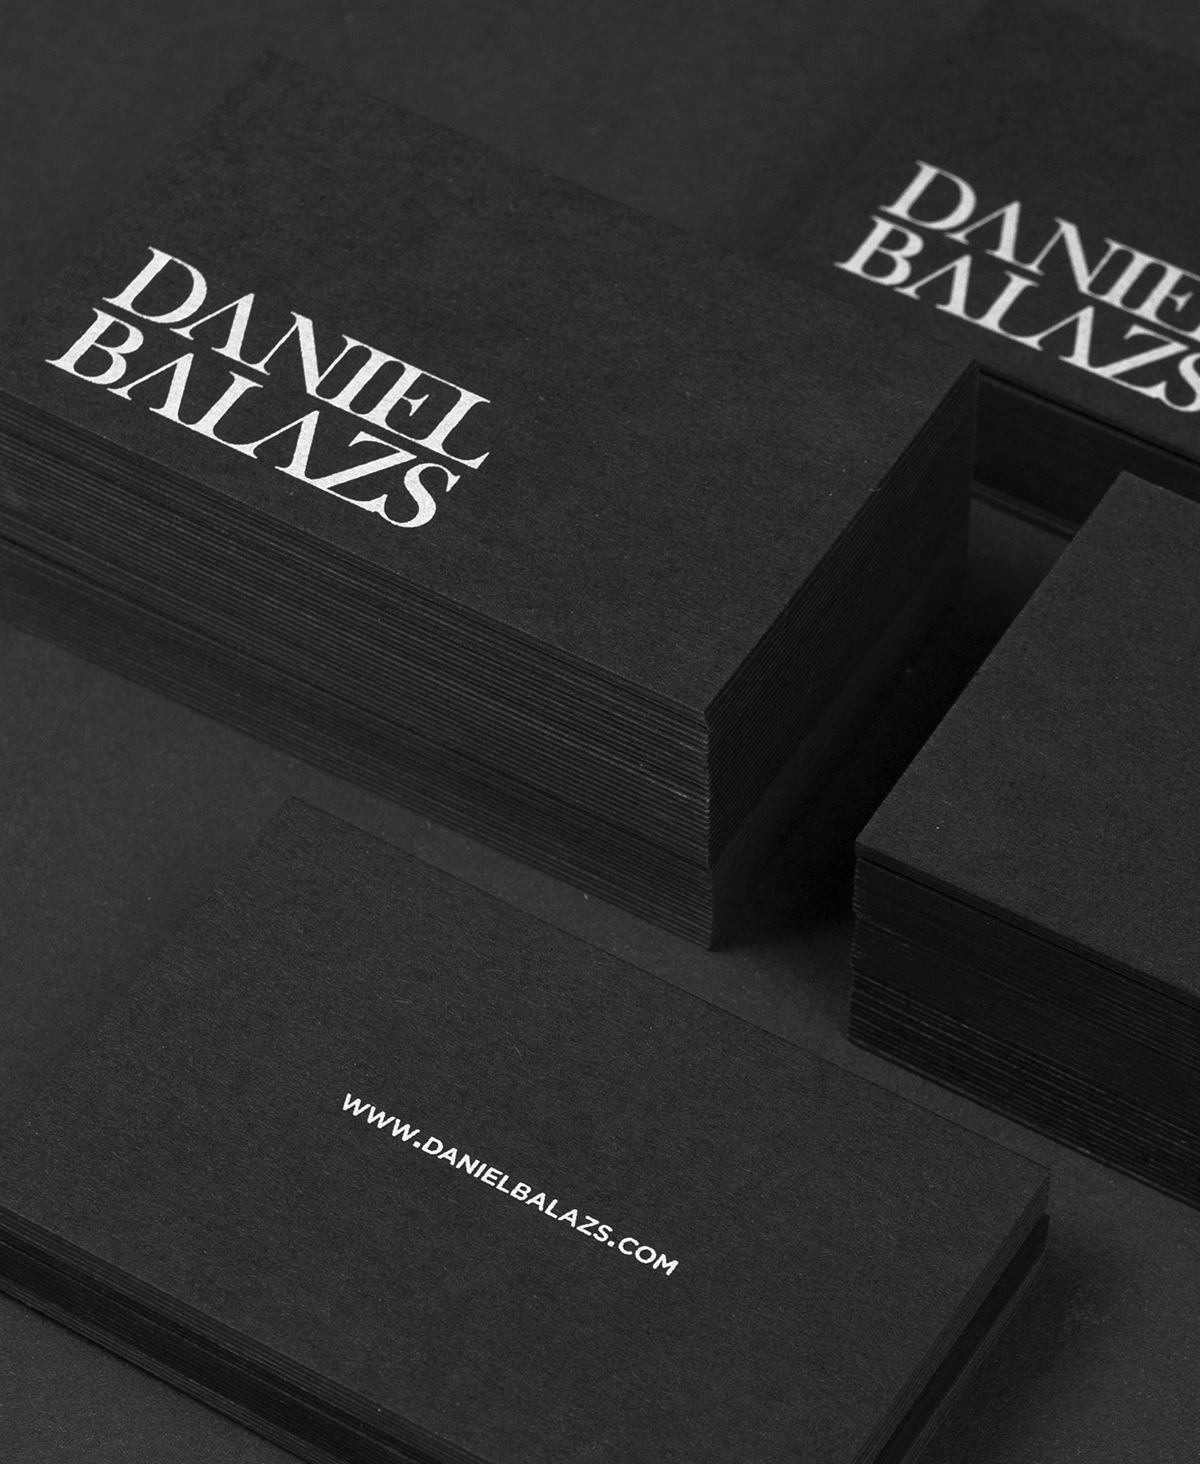 logo daniel balazs self Promotion business card business card black uncoated dark paper clean minimal